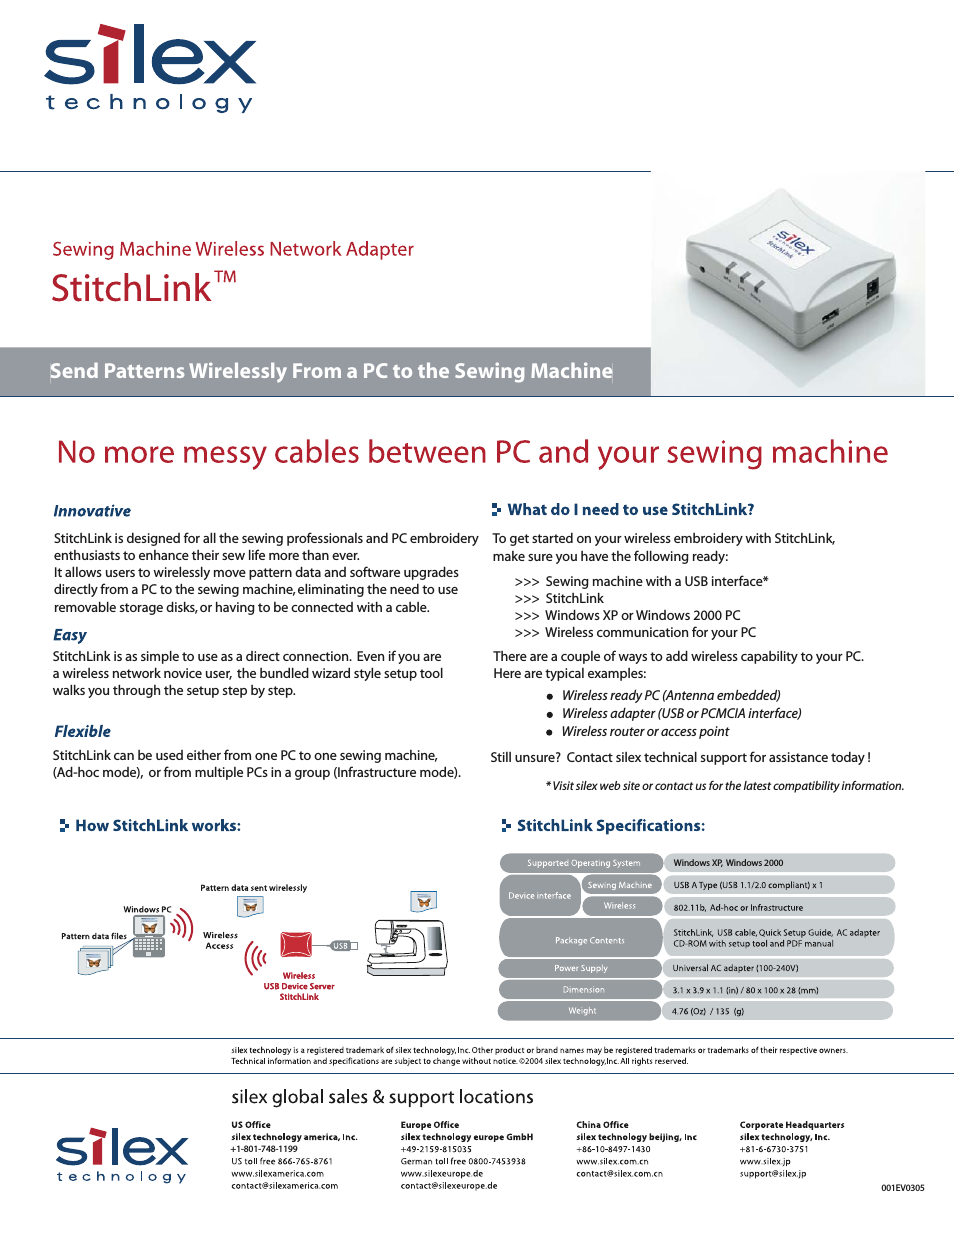 StitchLink Sewing Machine Wireless Network Adapter